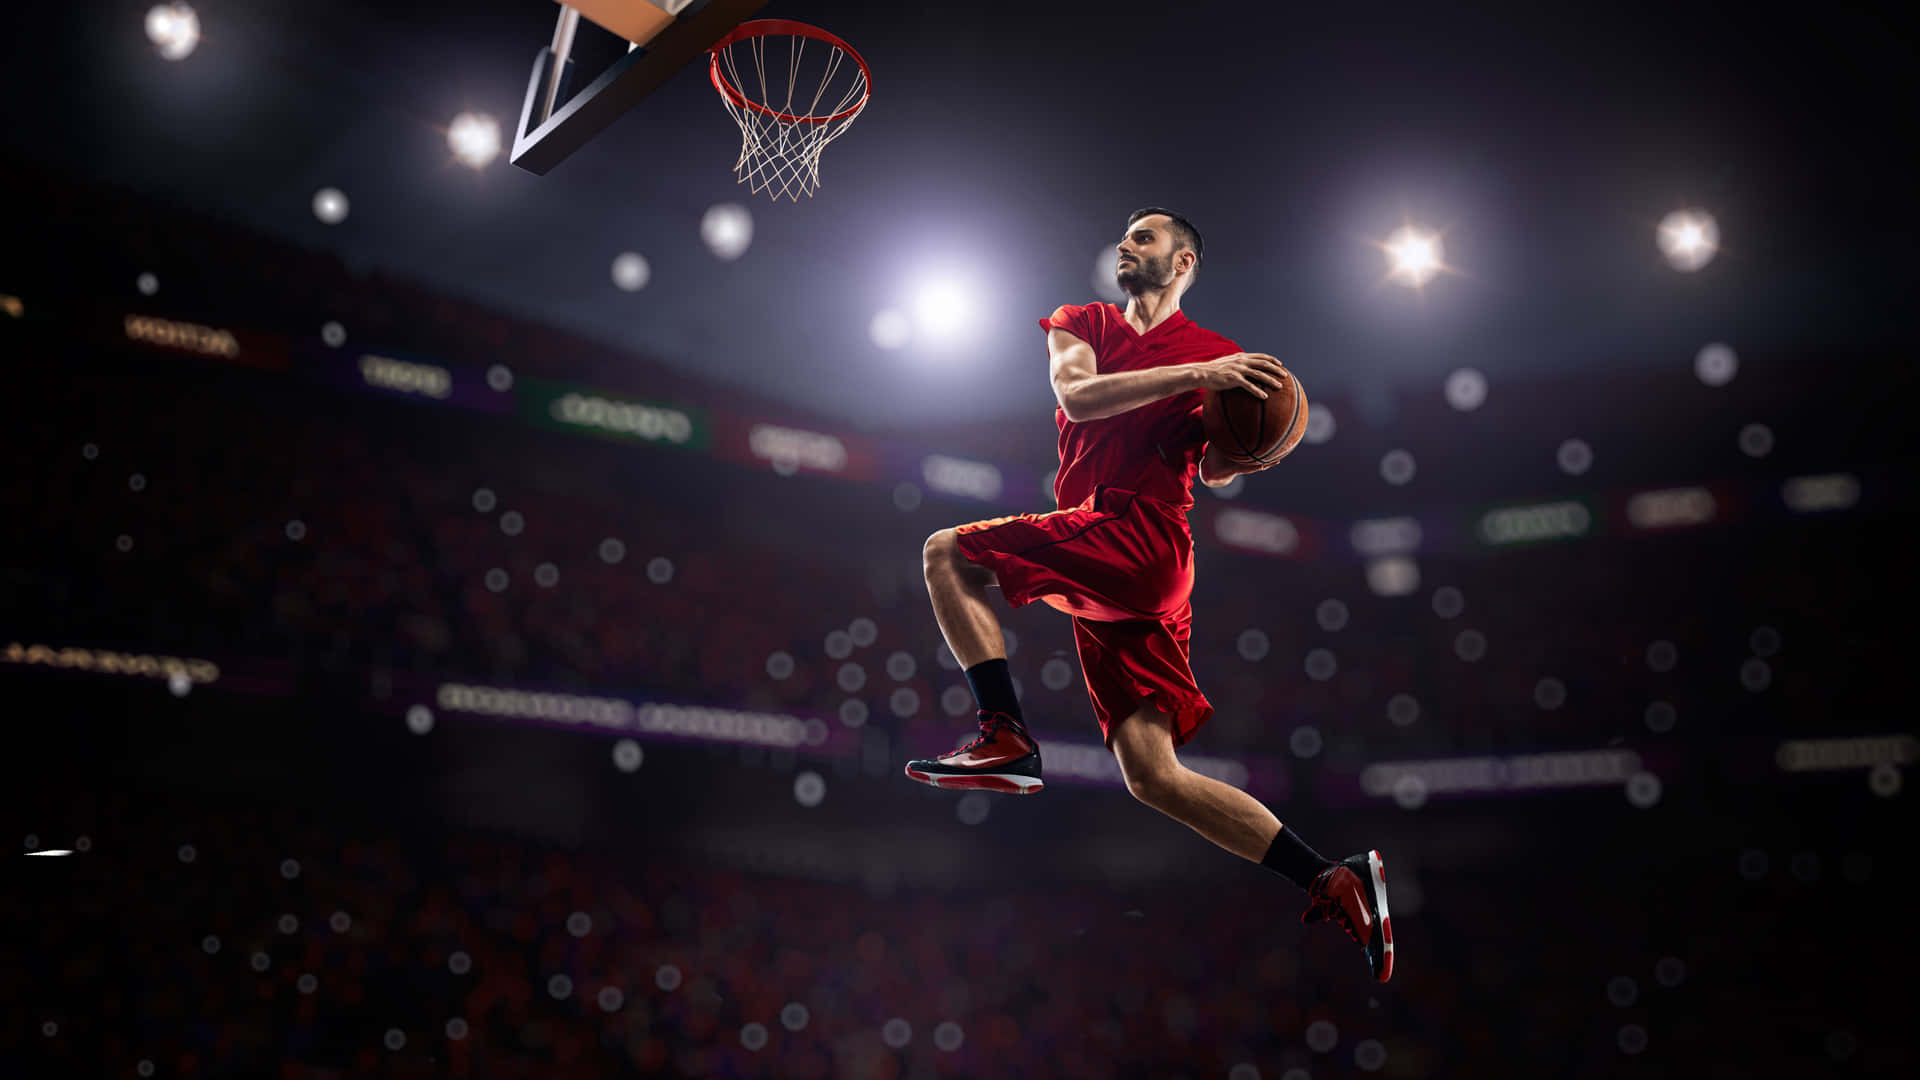 Slam Dunk In Action Basketball Player.jpg Wallpaper